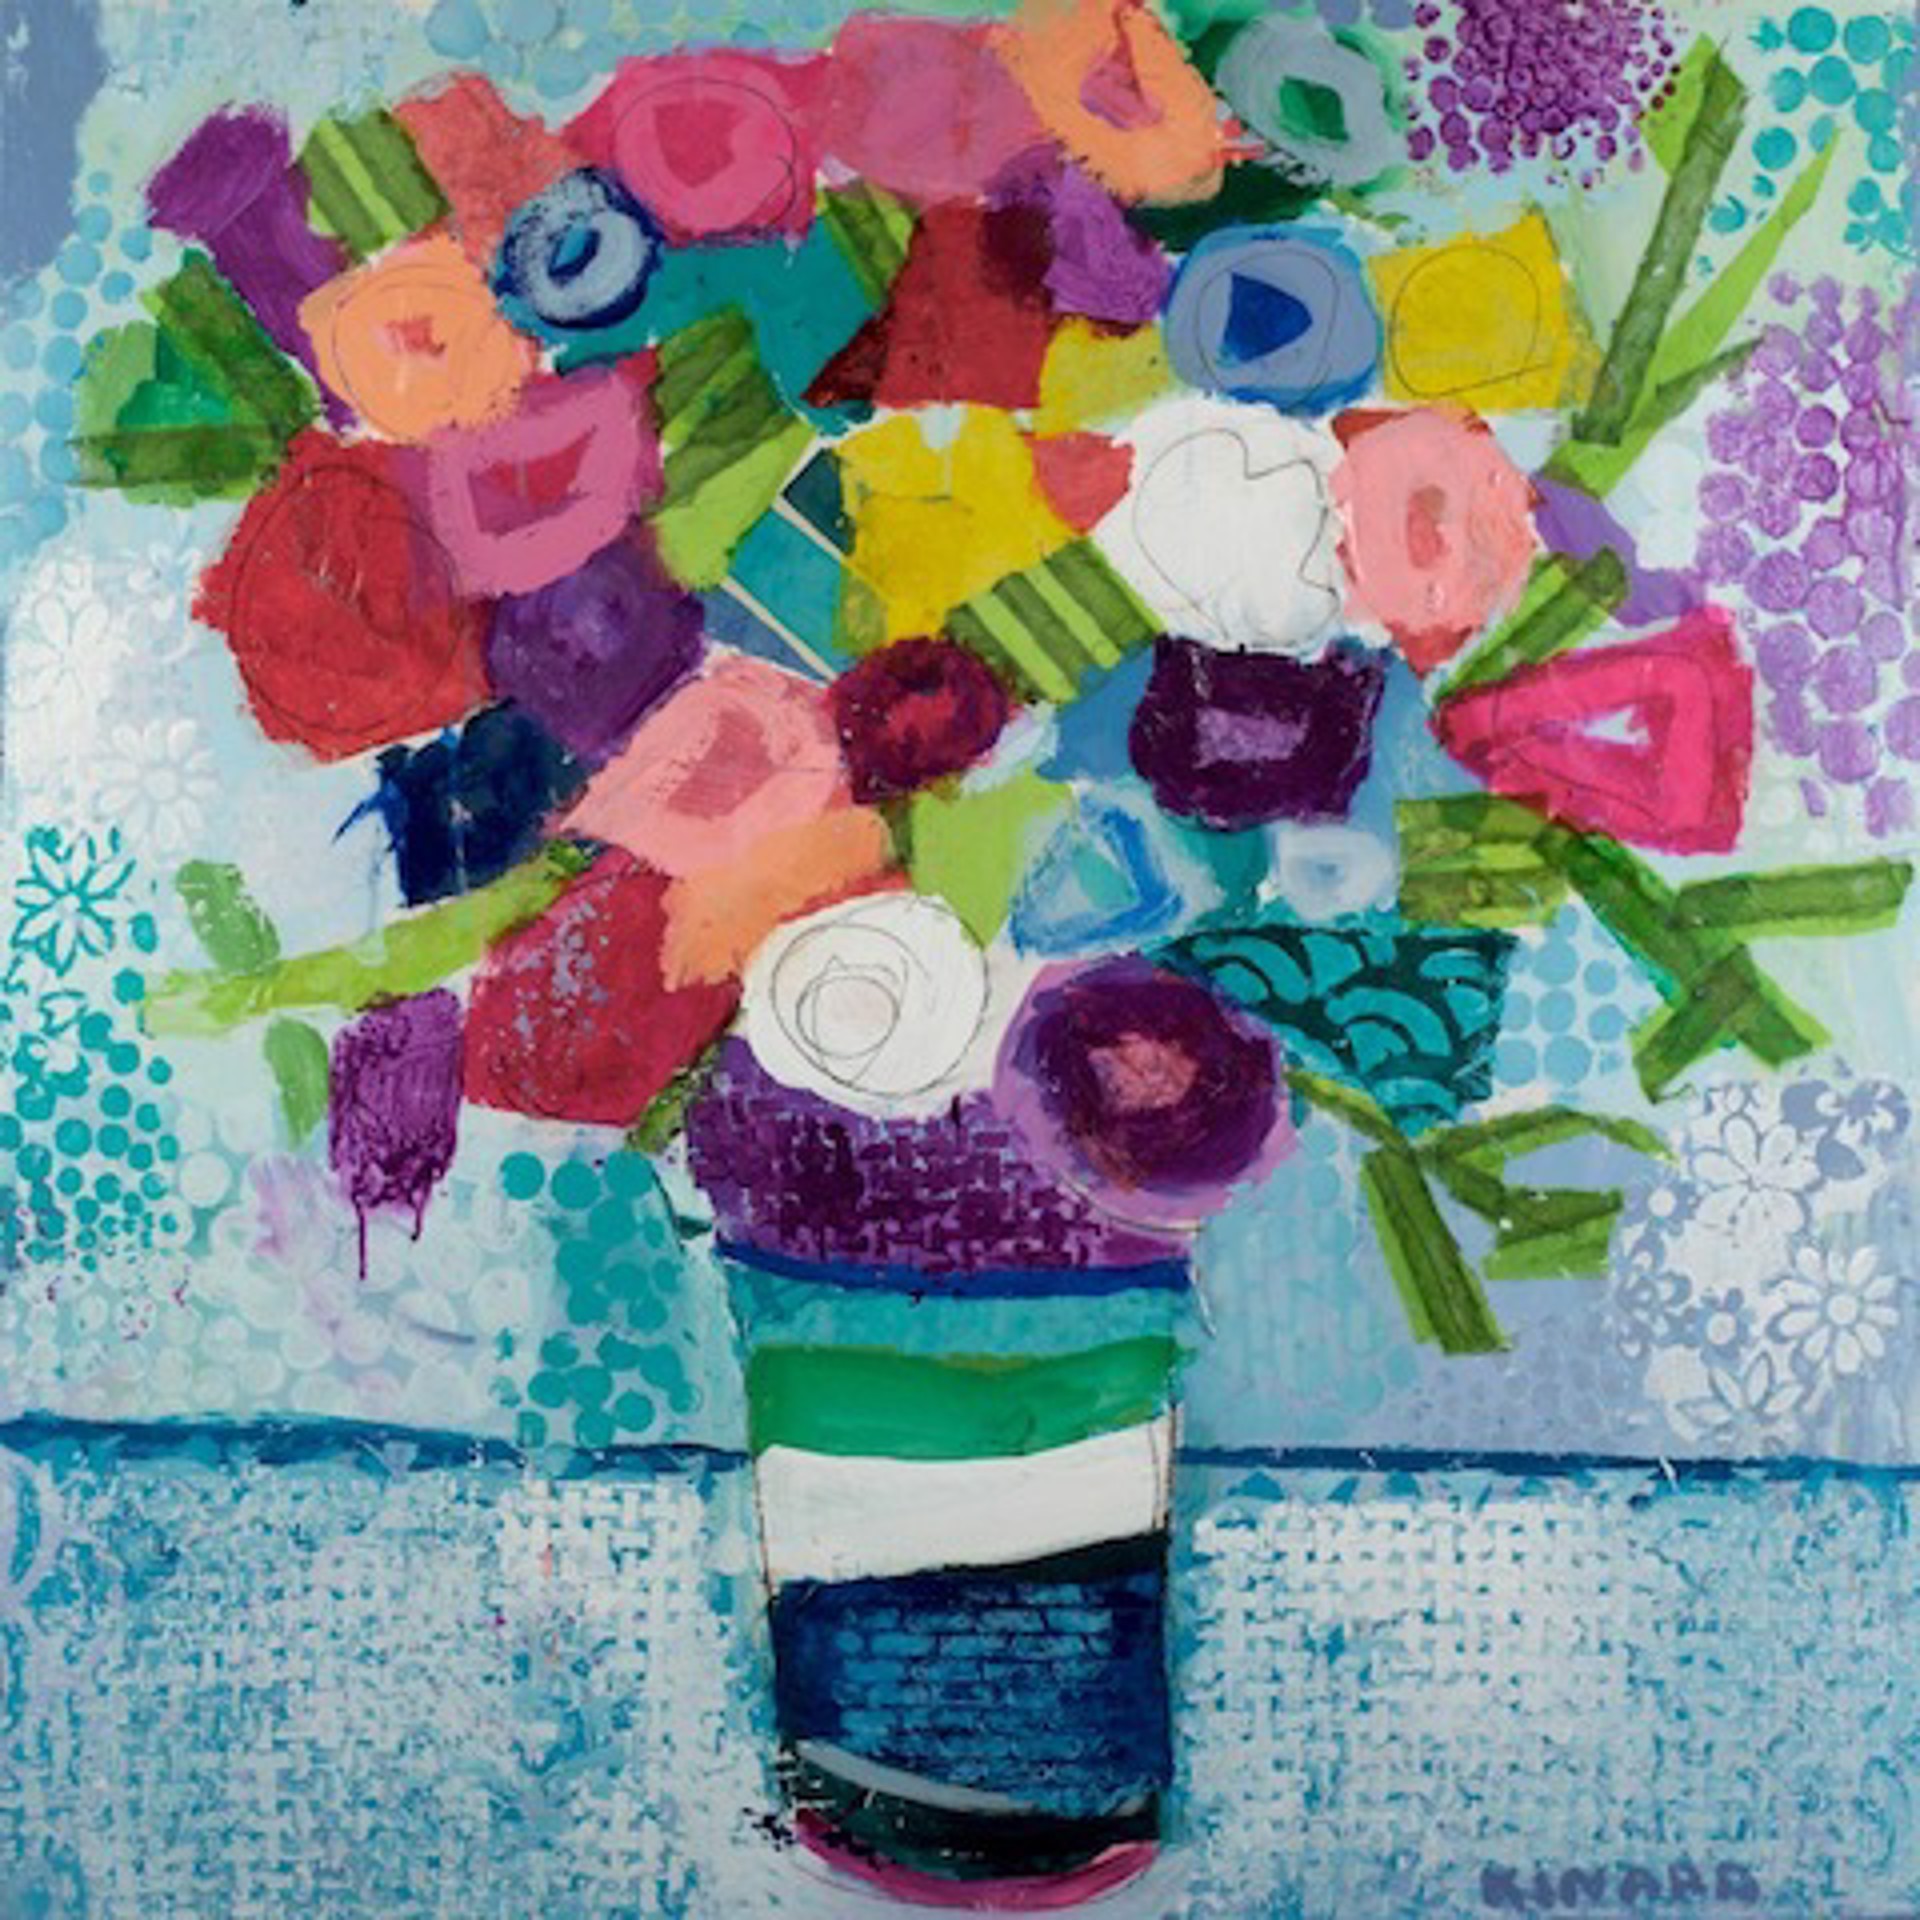 My Favorite Flowers by Christy Kinard